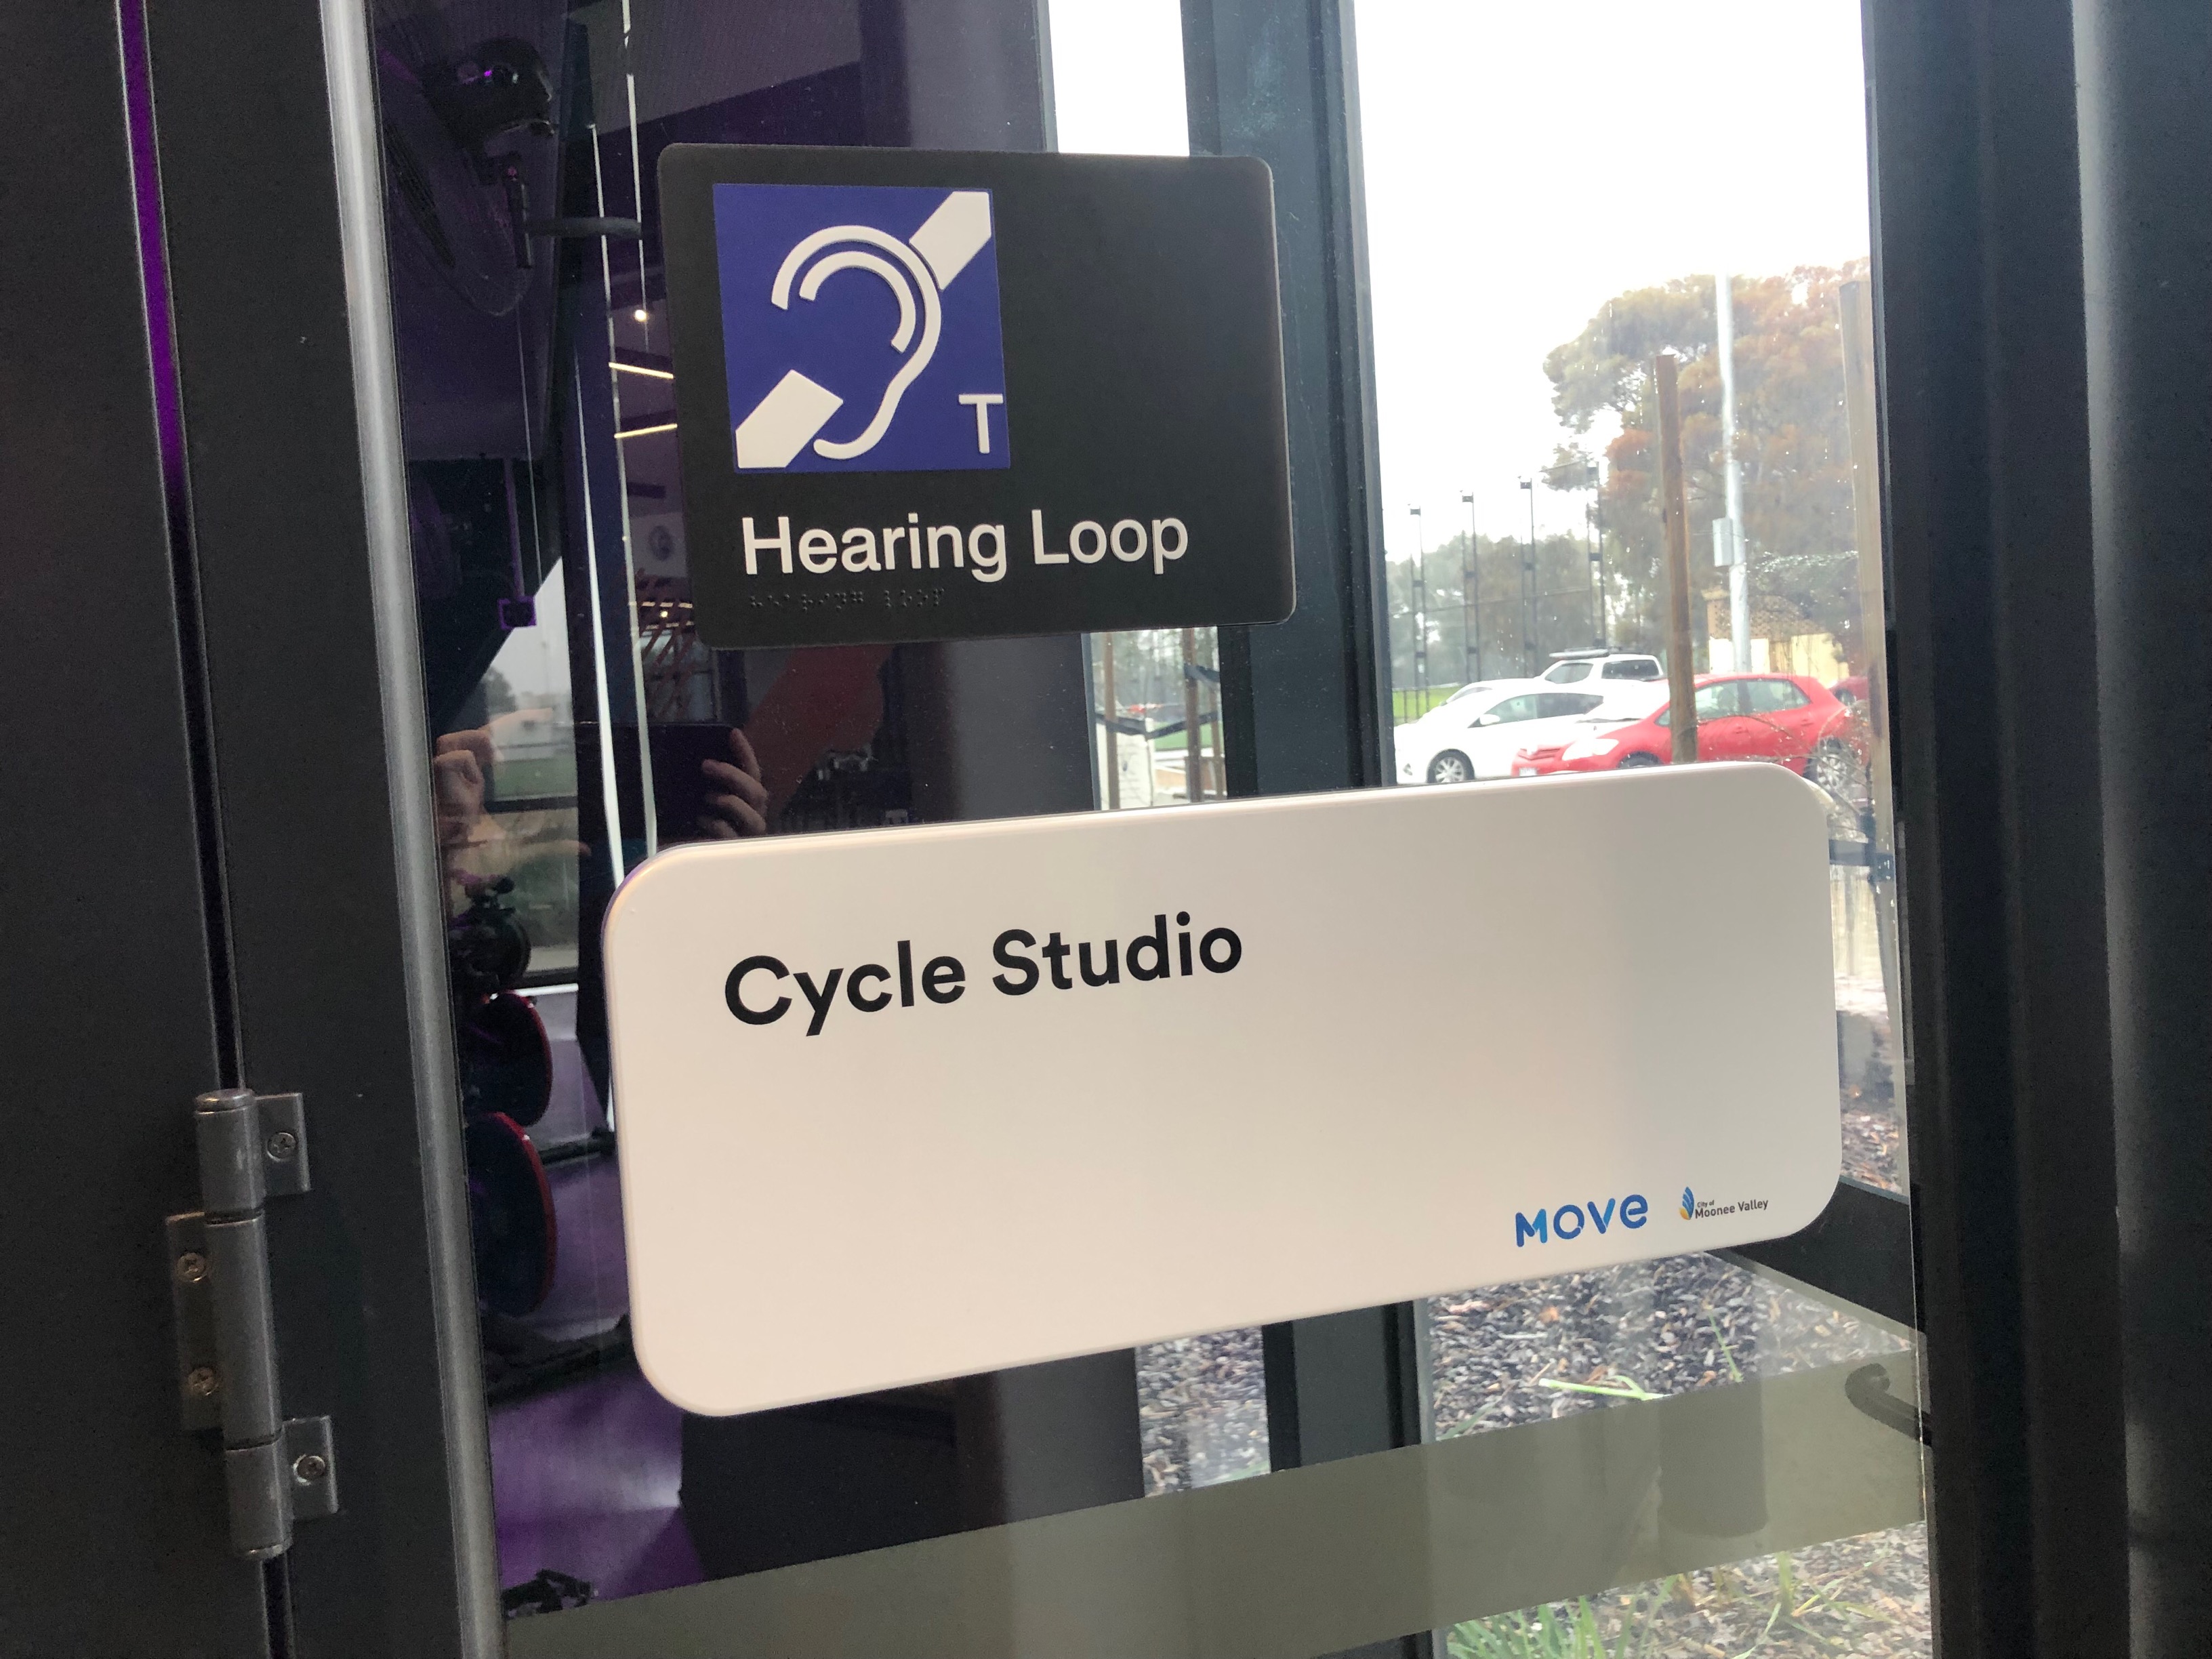 Image of Cycle Studio door with Hearing Loop signage